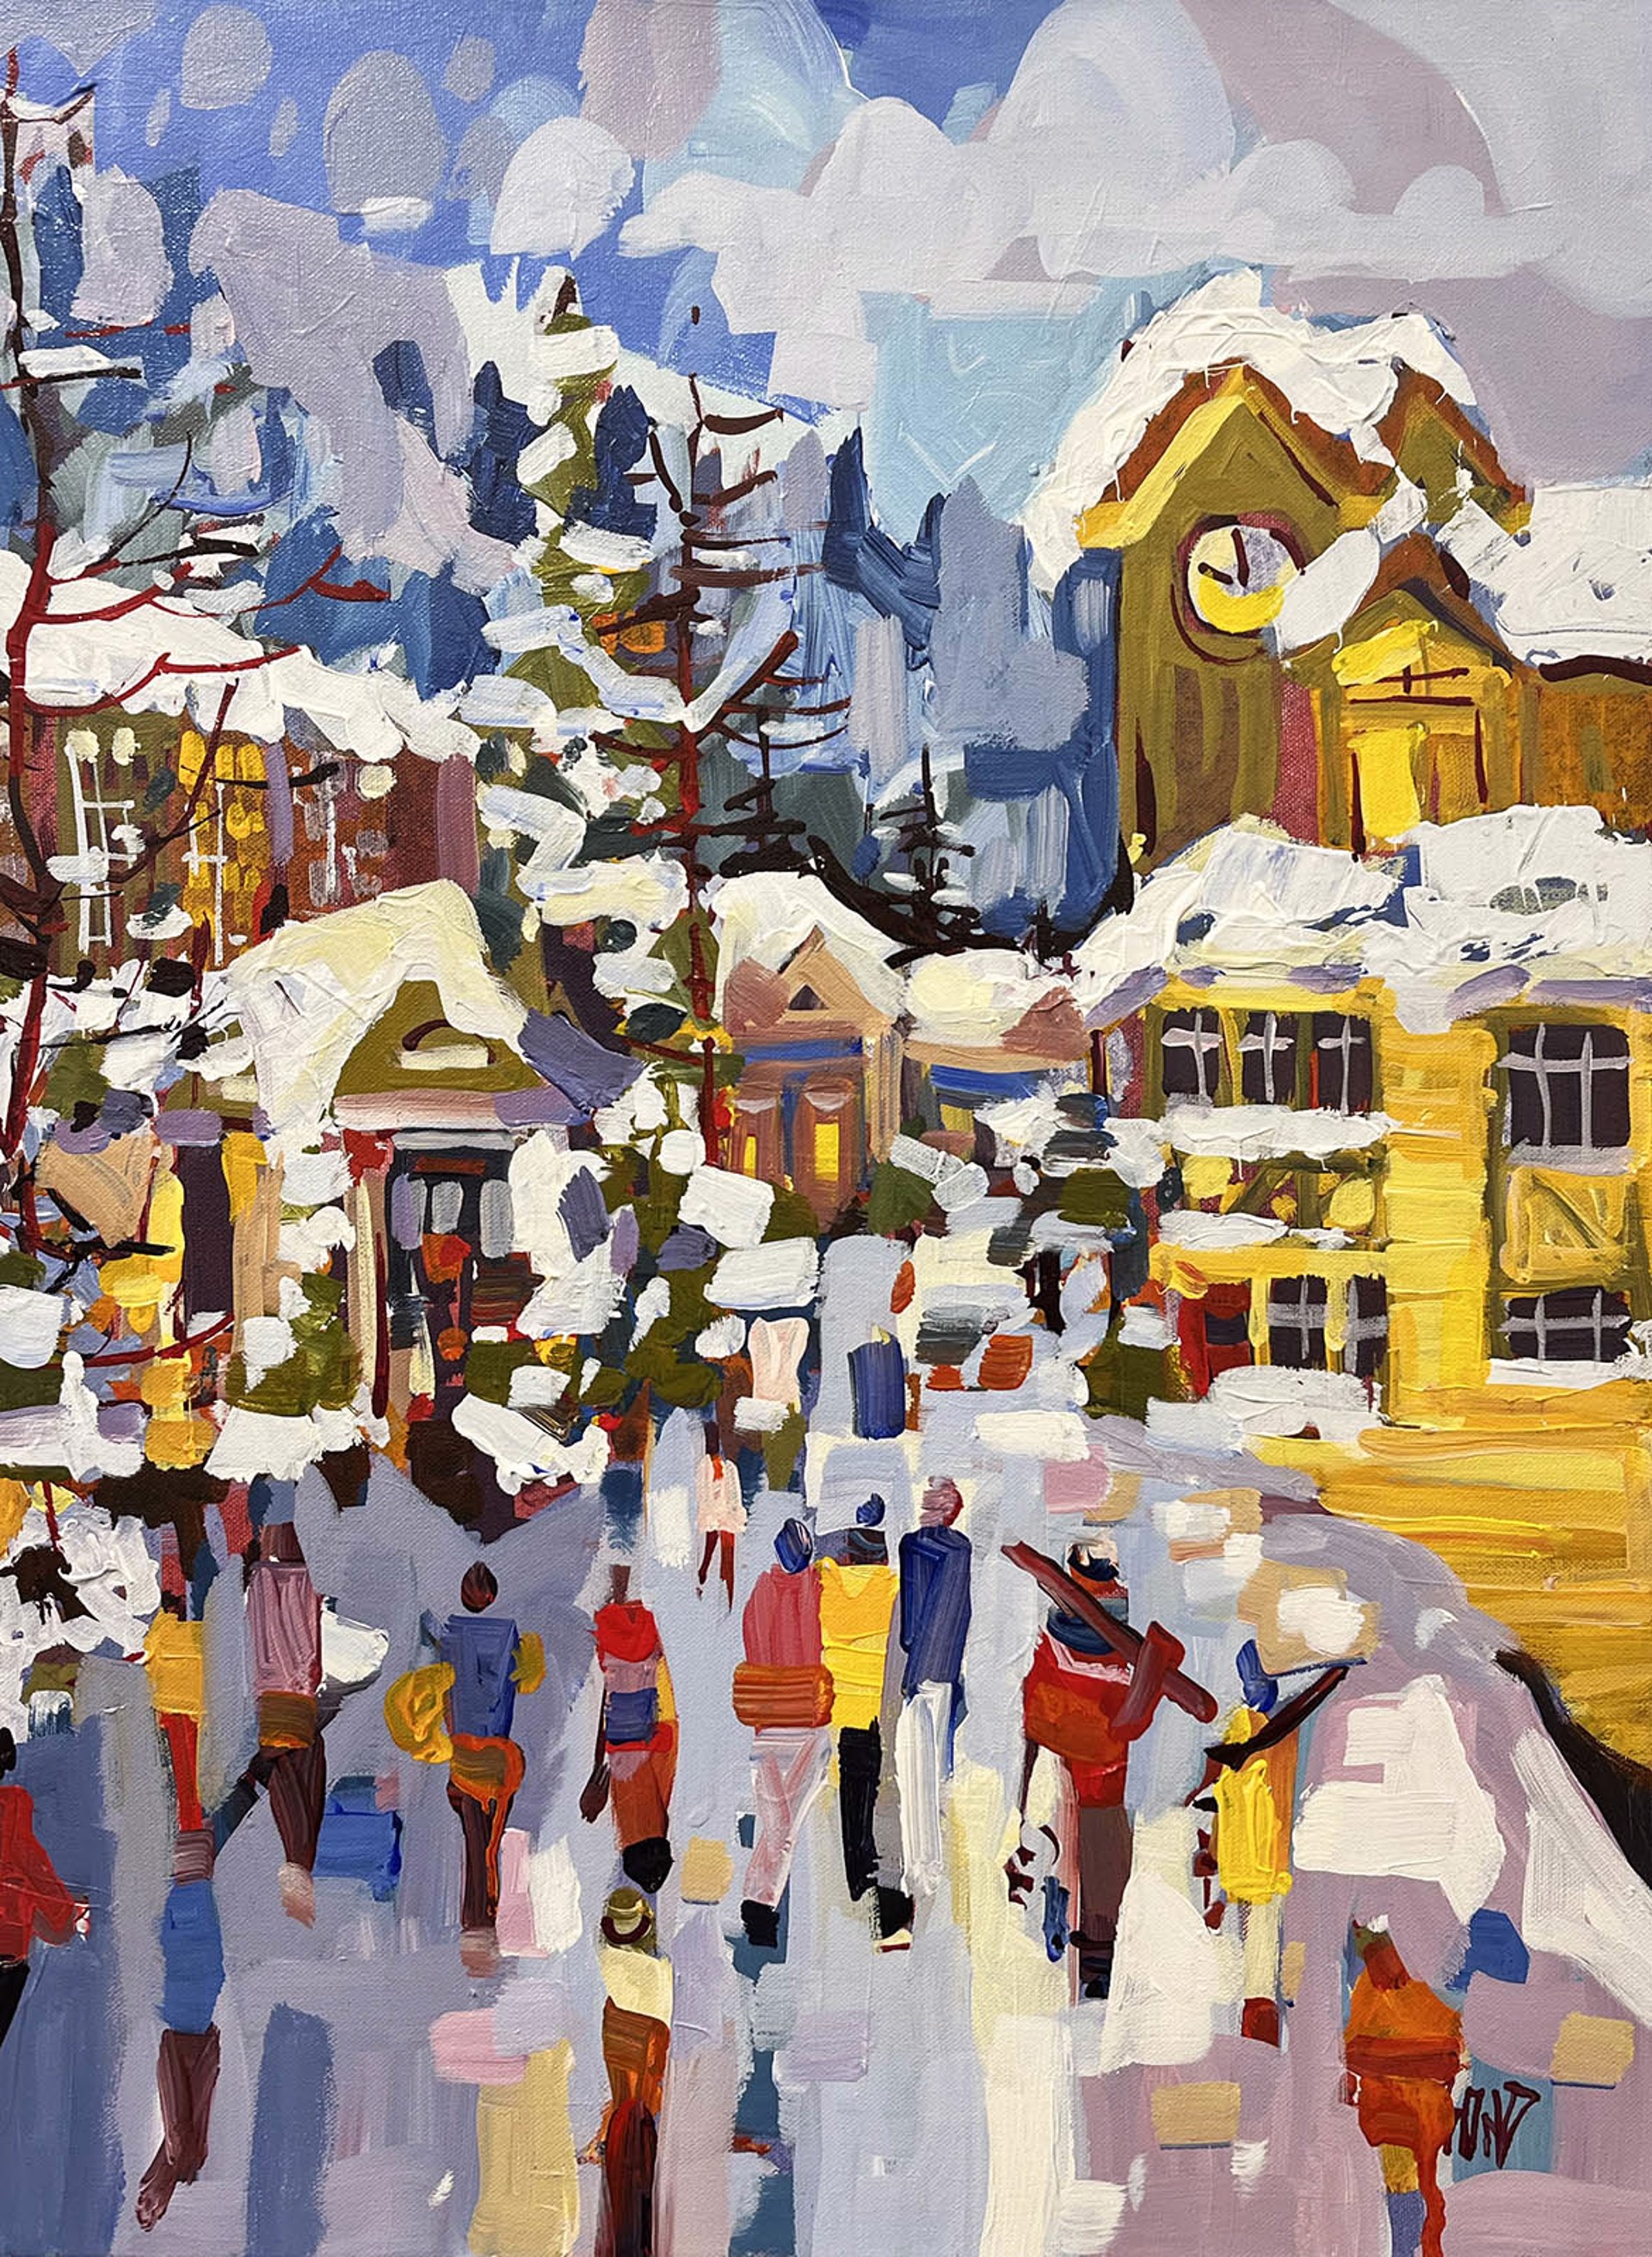 Winter Villages - Big White by Rick Bond